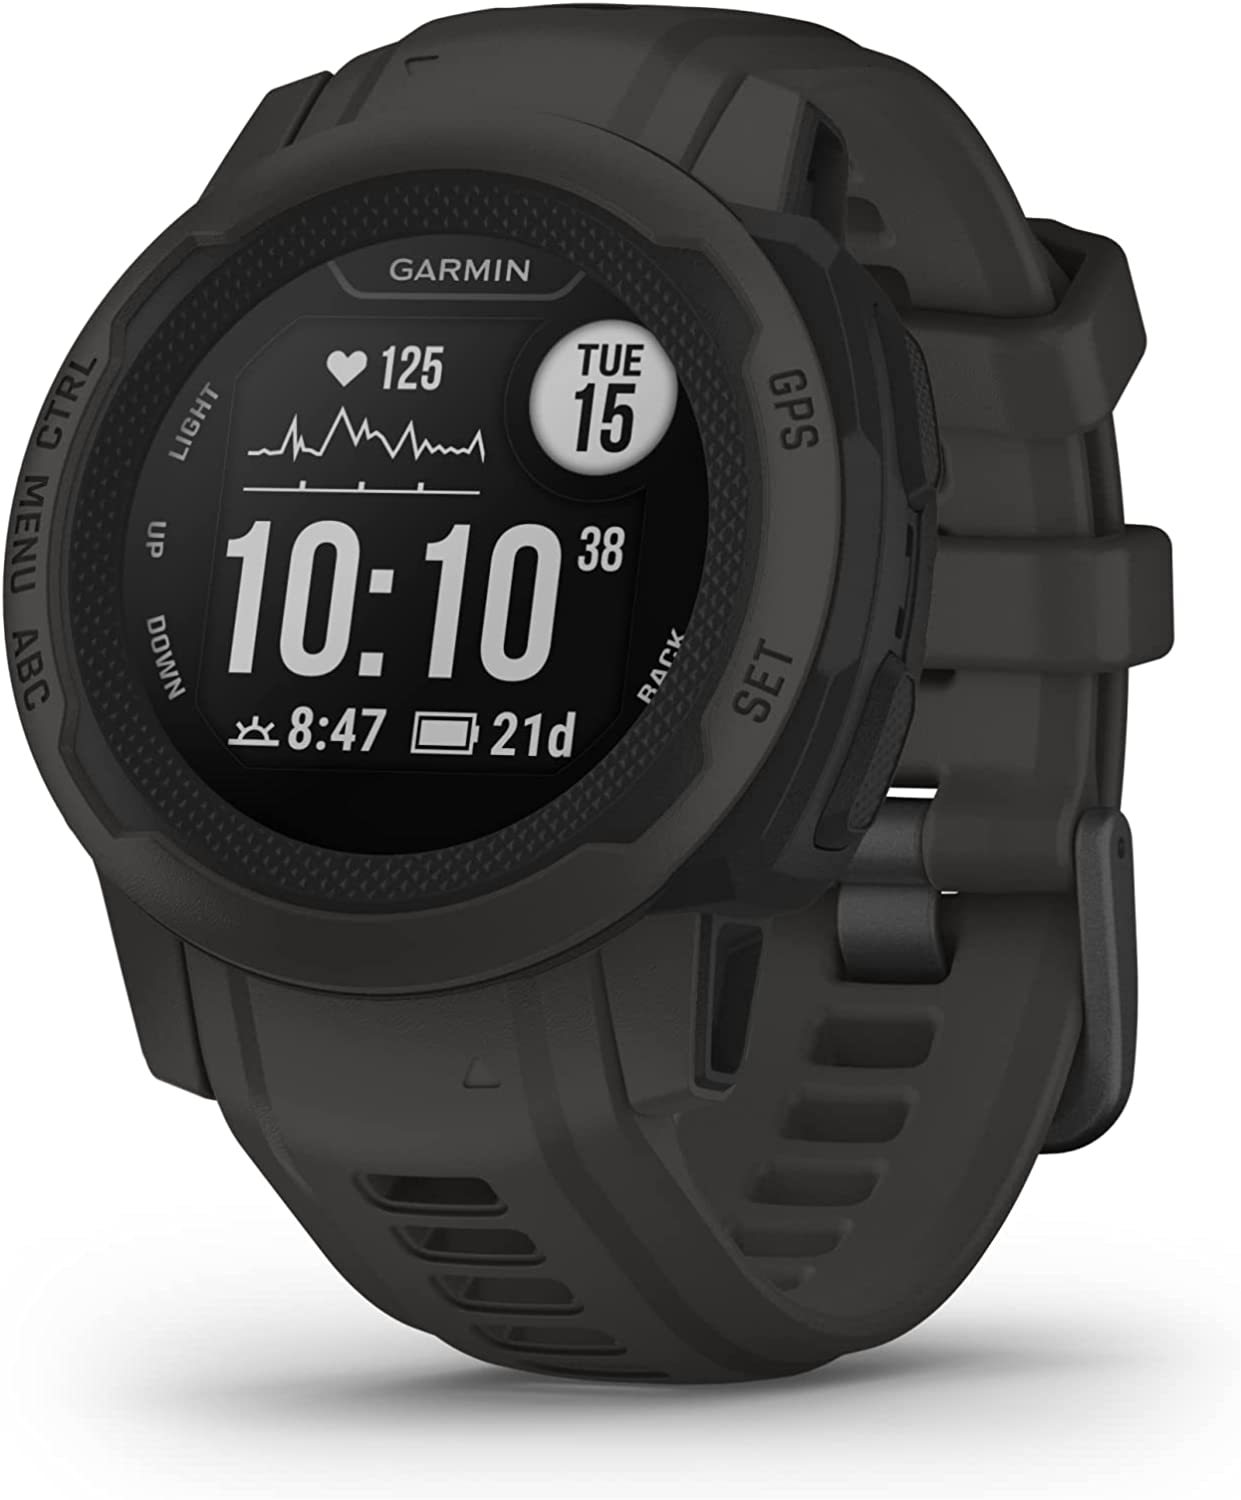 Q02 Smart watch - GPS Tracker watch for kids - YouTube